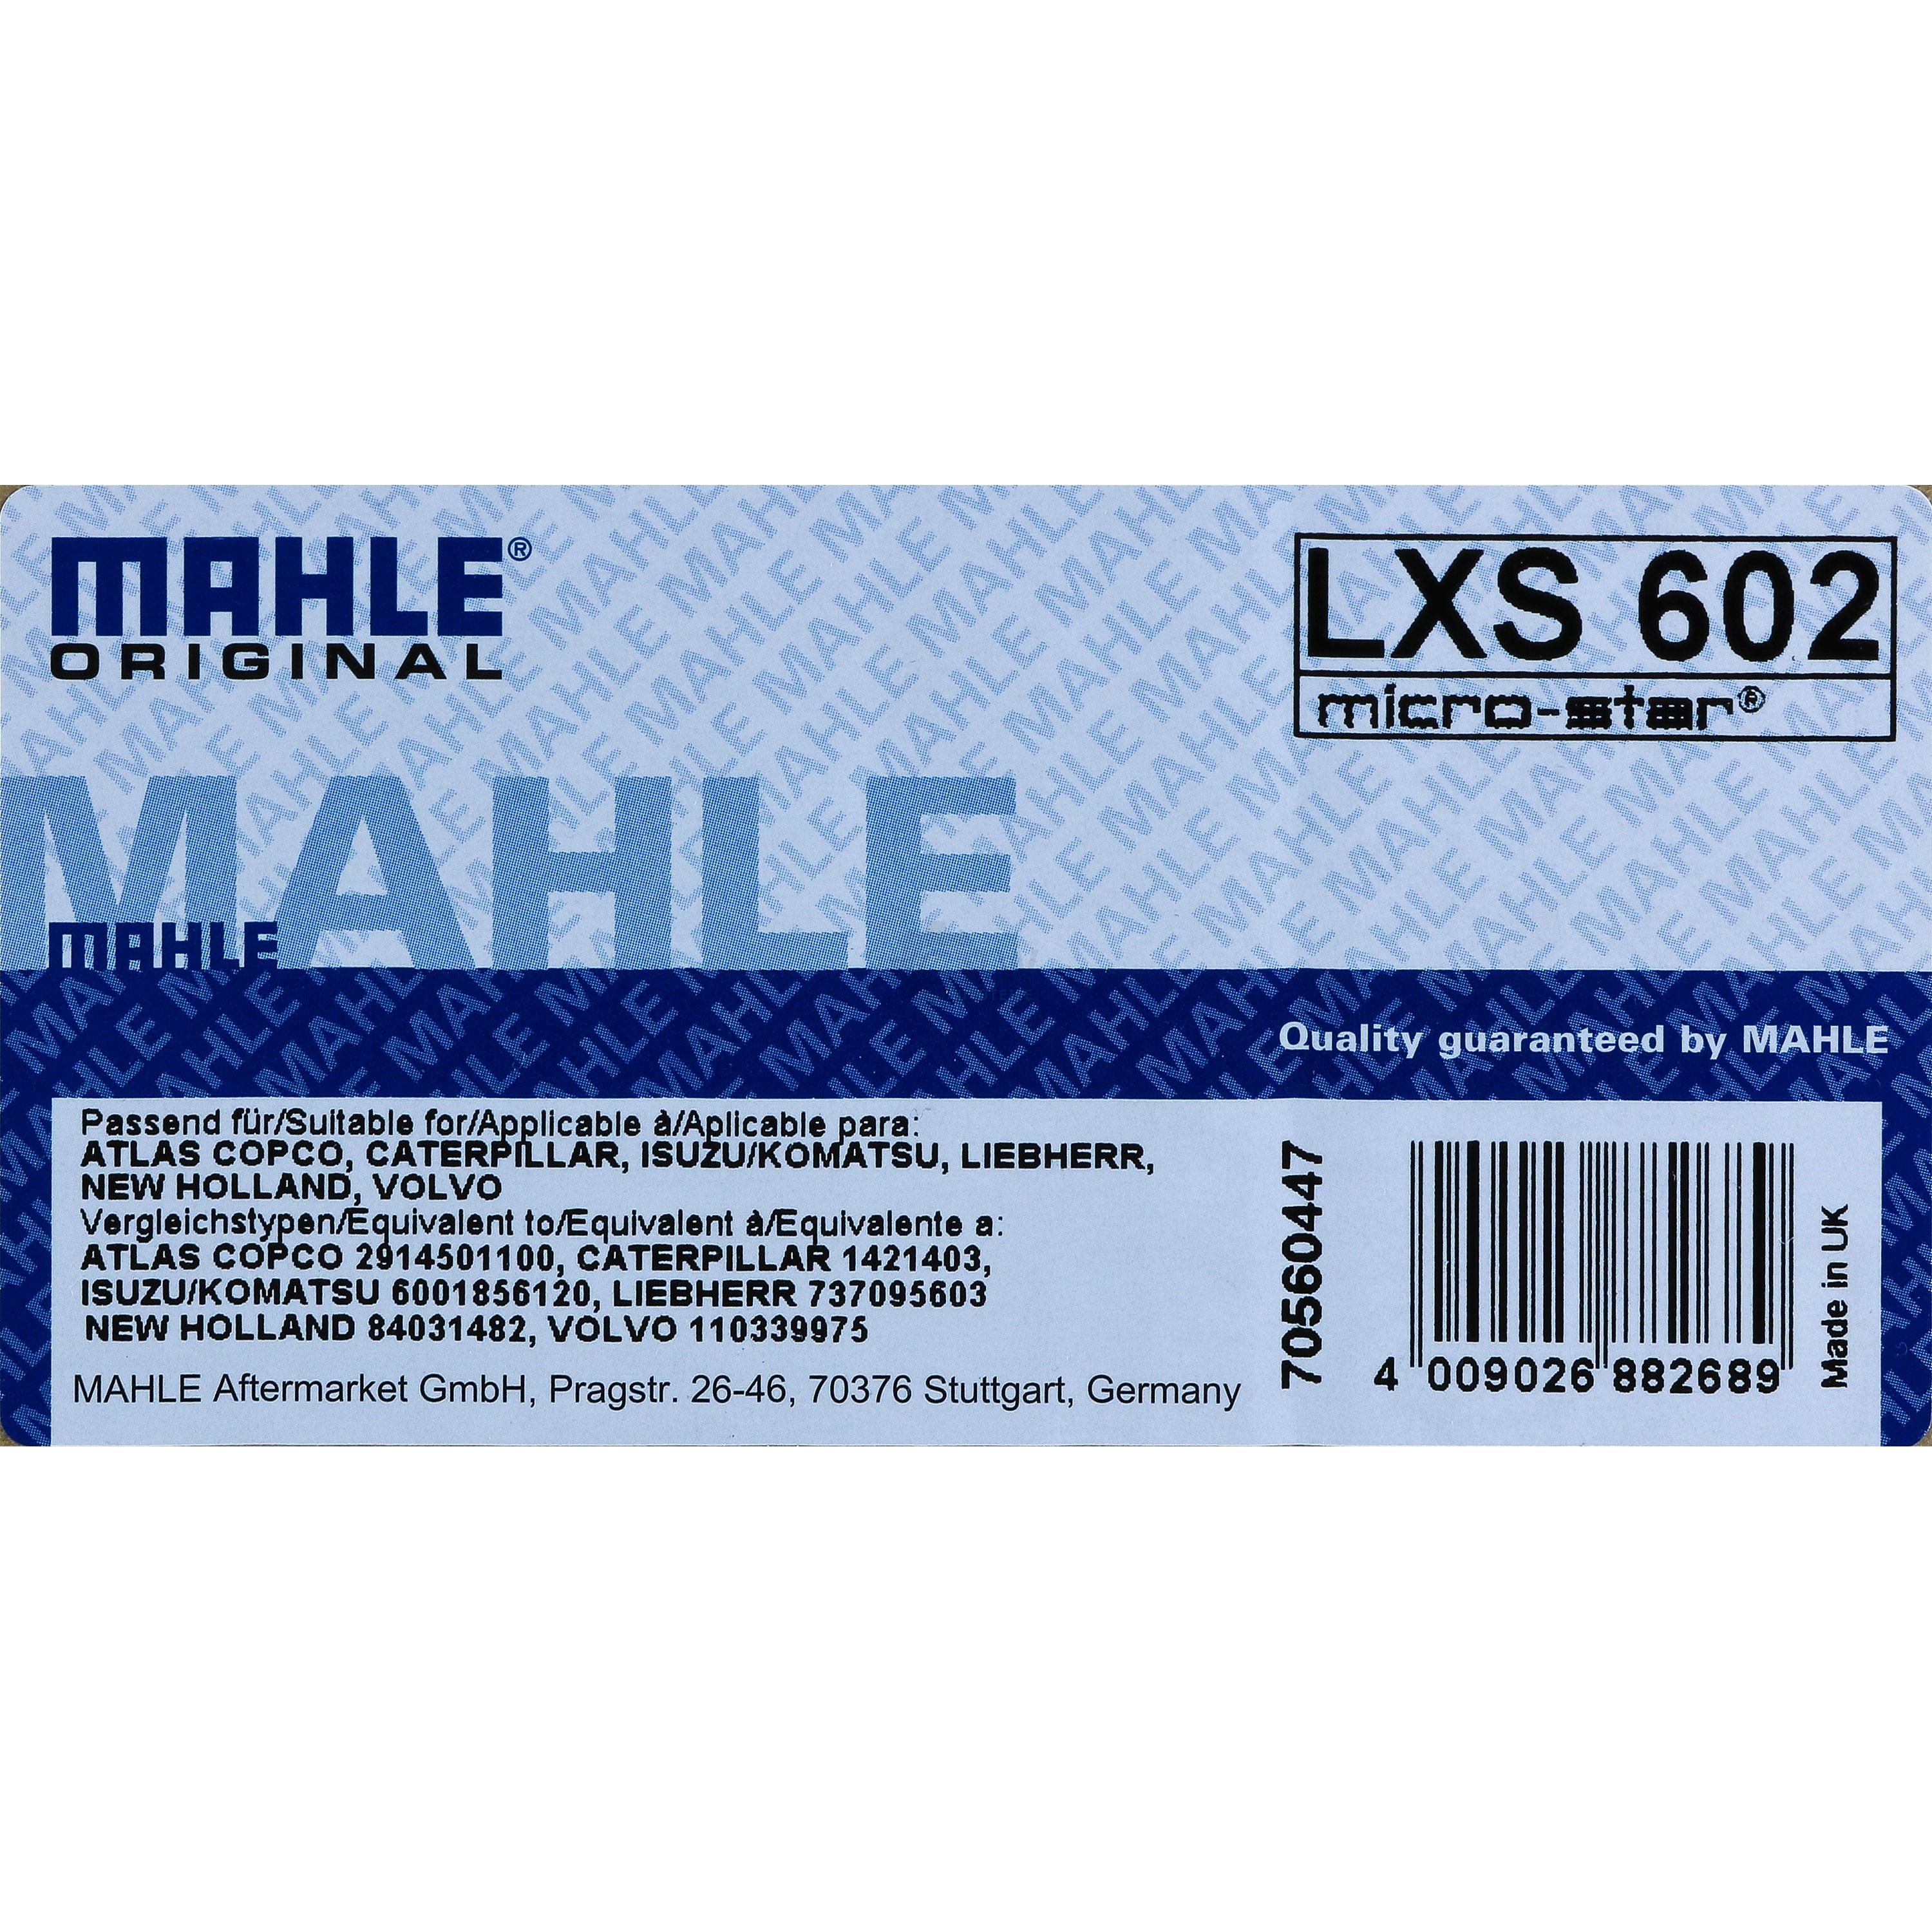 MAHLE / KNECHT Sekundärluftfilter LXS 602 Air Filter